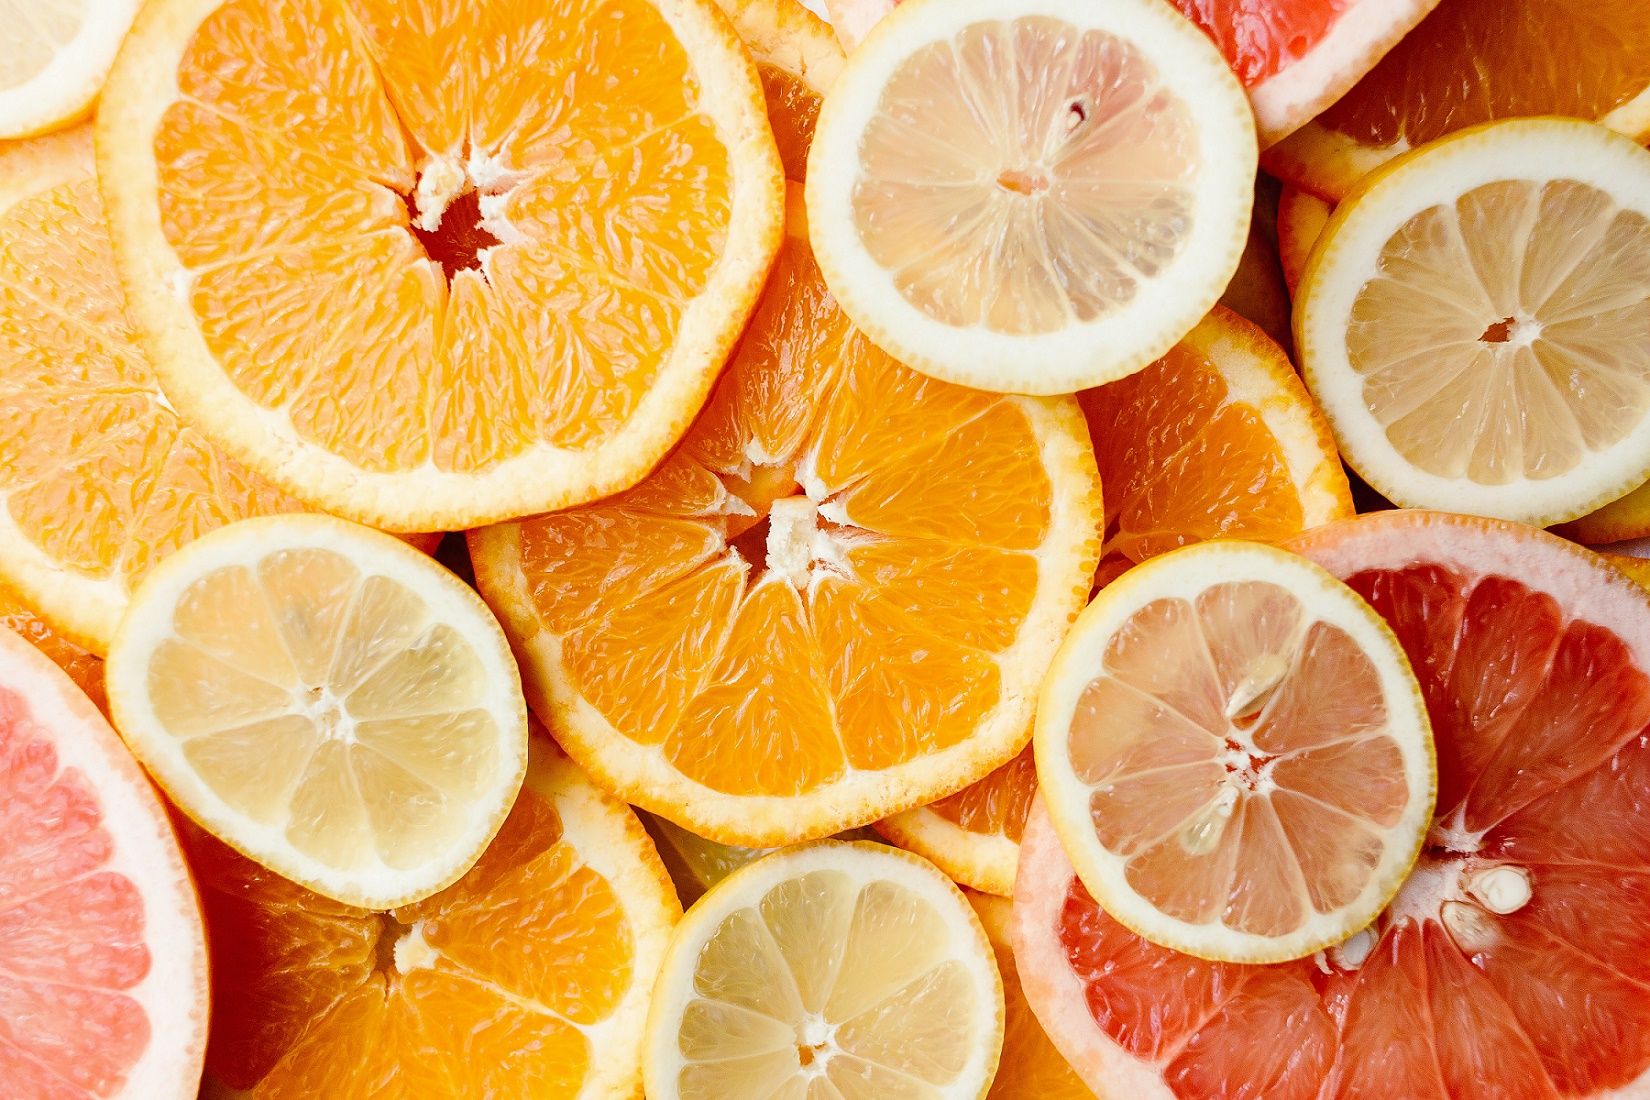 Ilustrasi buah jeruk.